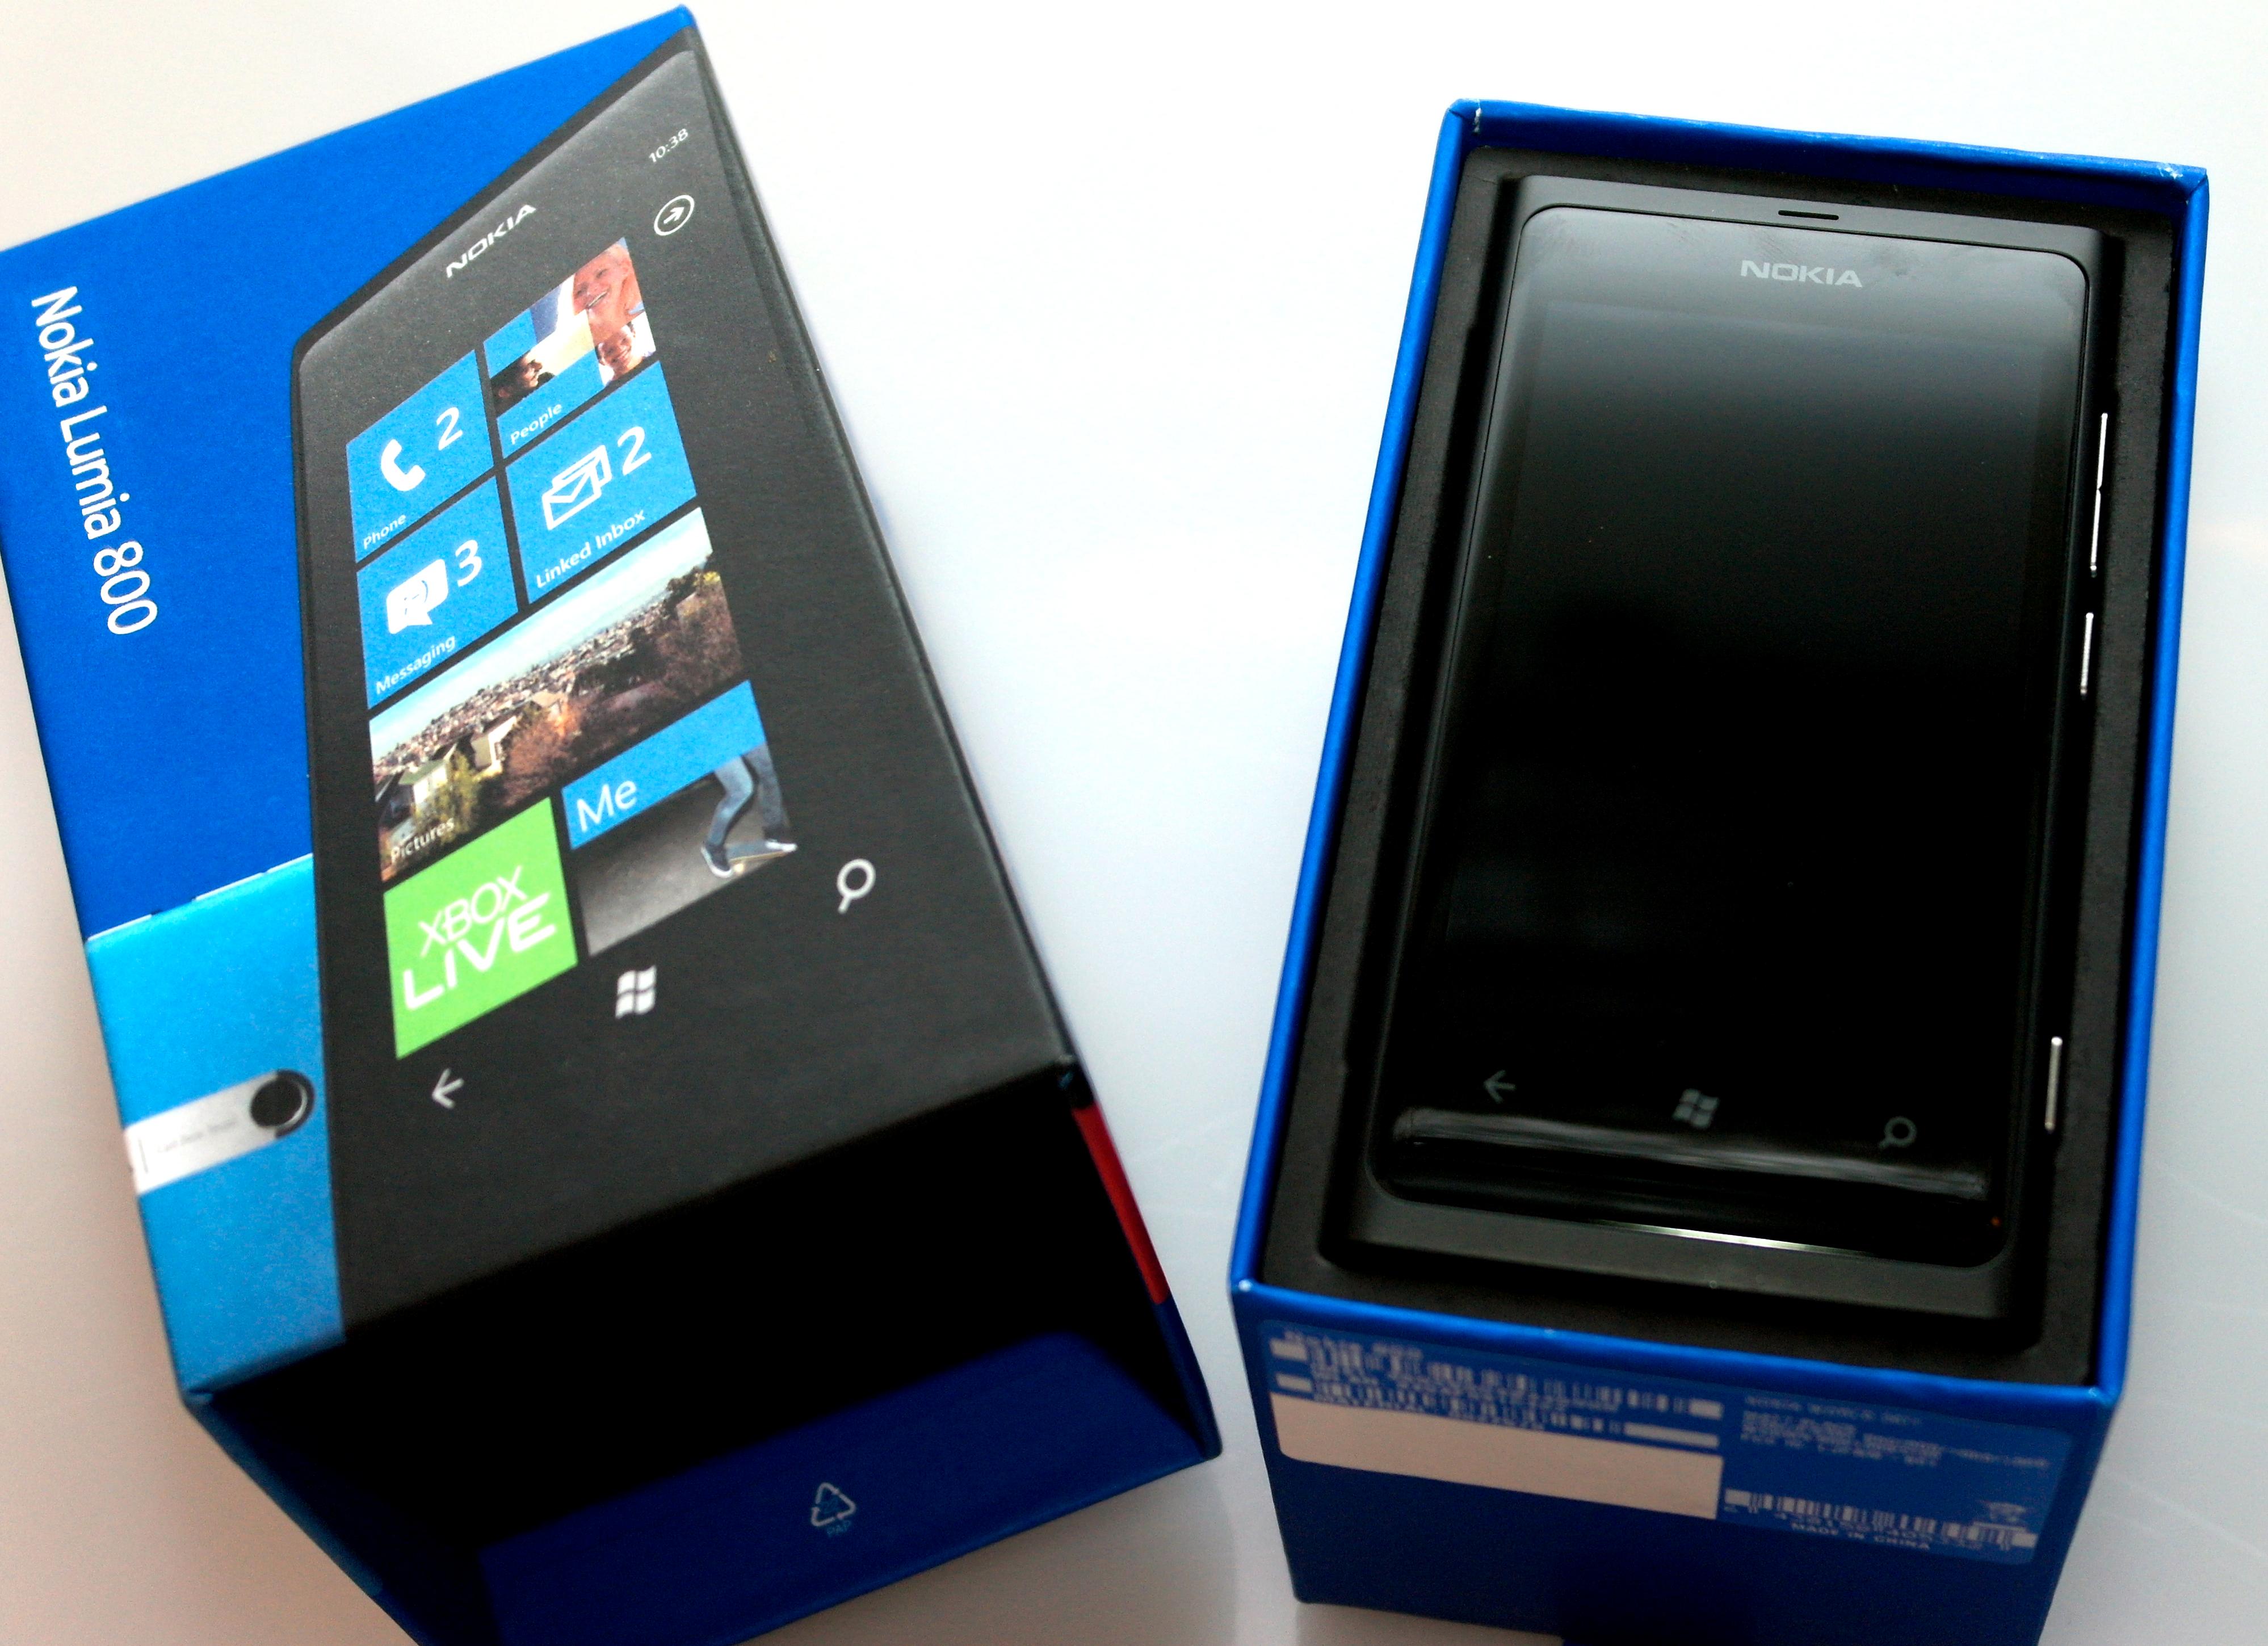 Lumia 800 er Nokias første telefon med Microsofts Windows Phone-menyer.